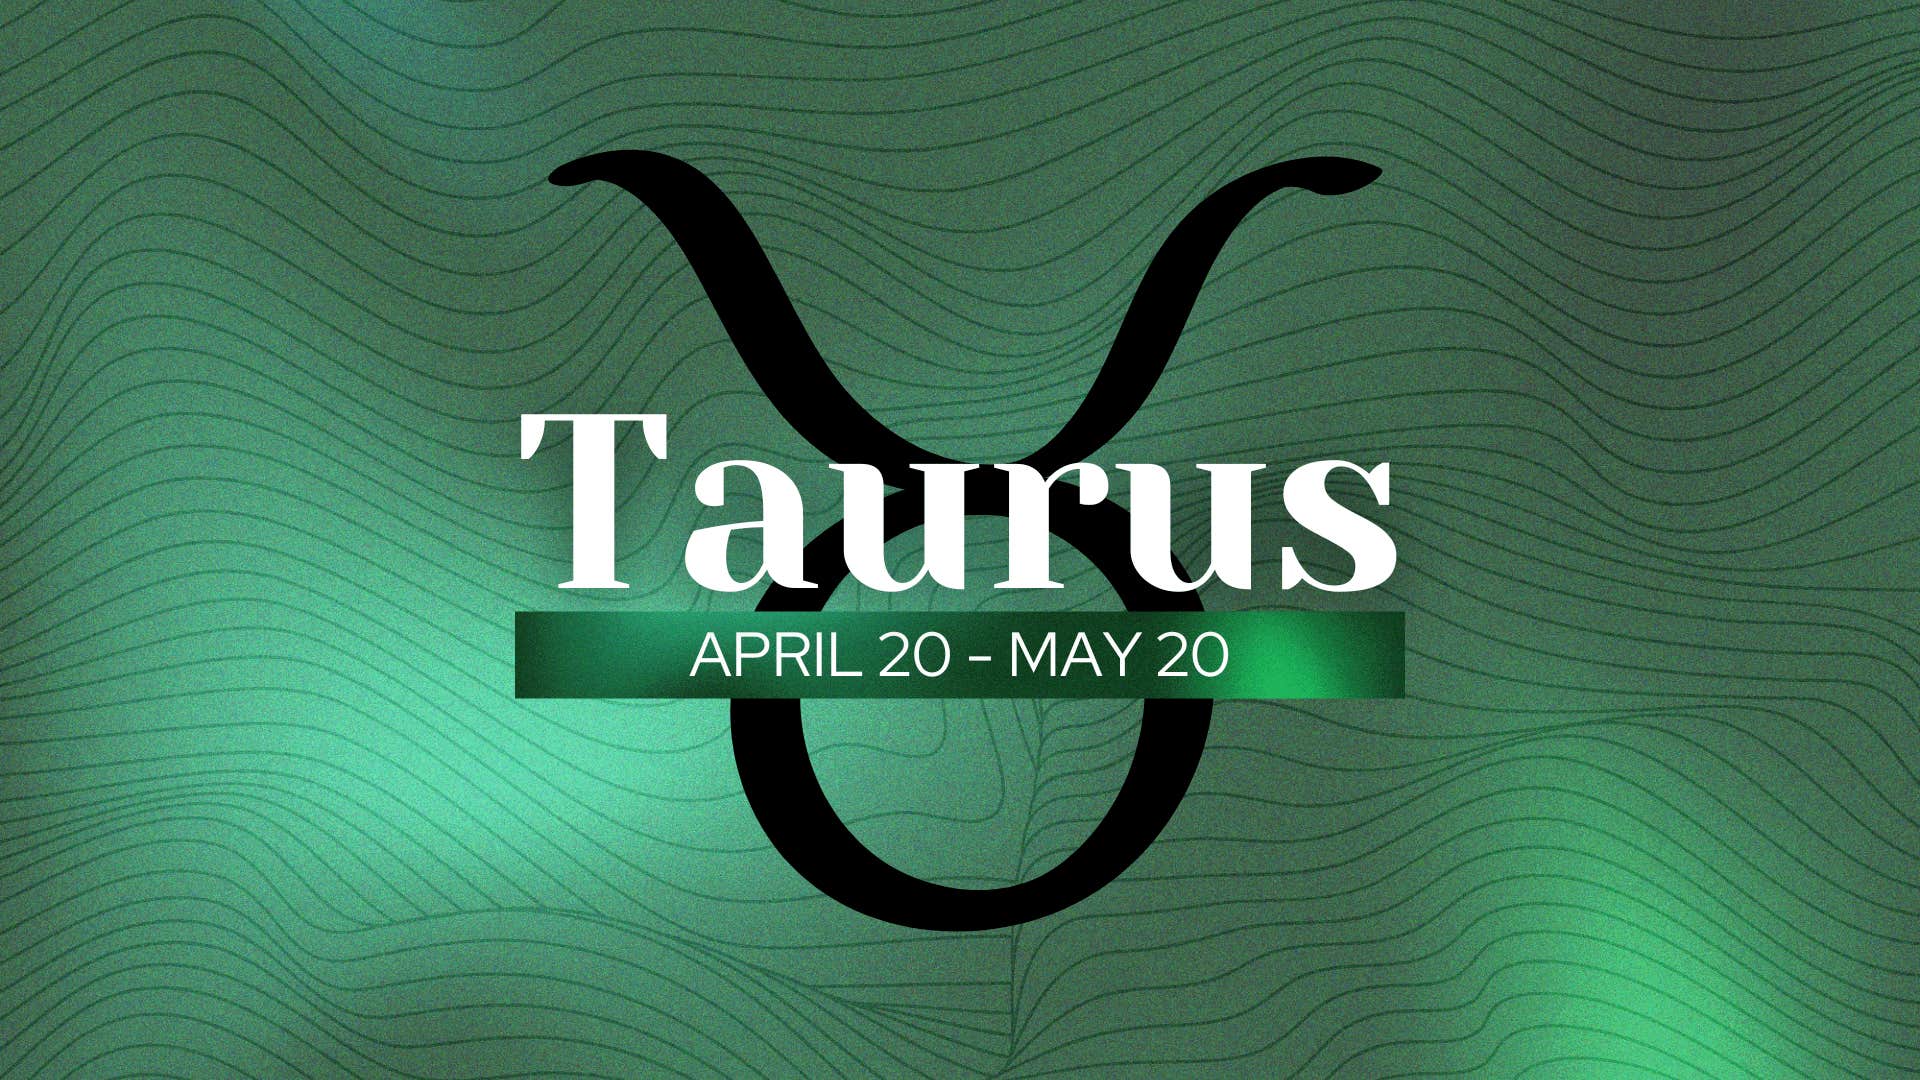 awkward relationship habits for taurus